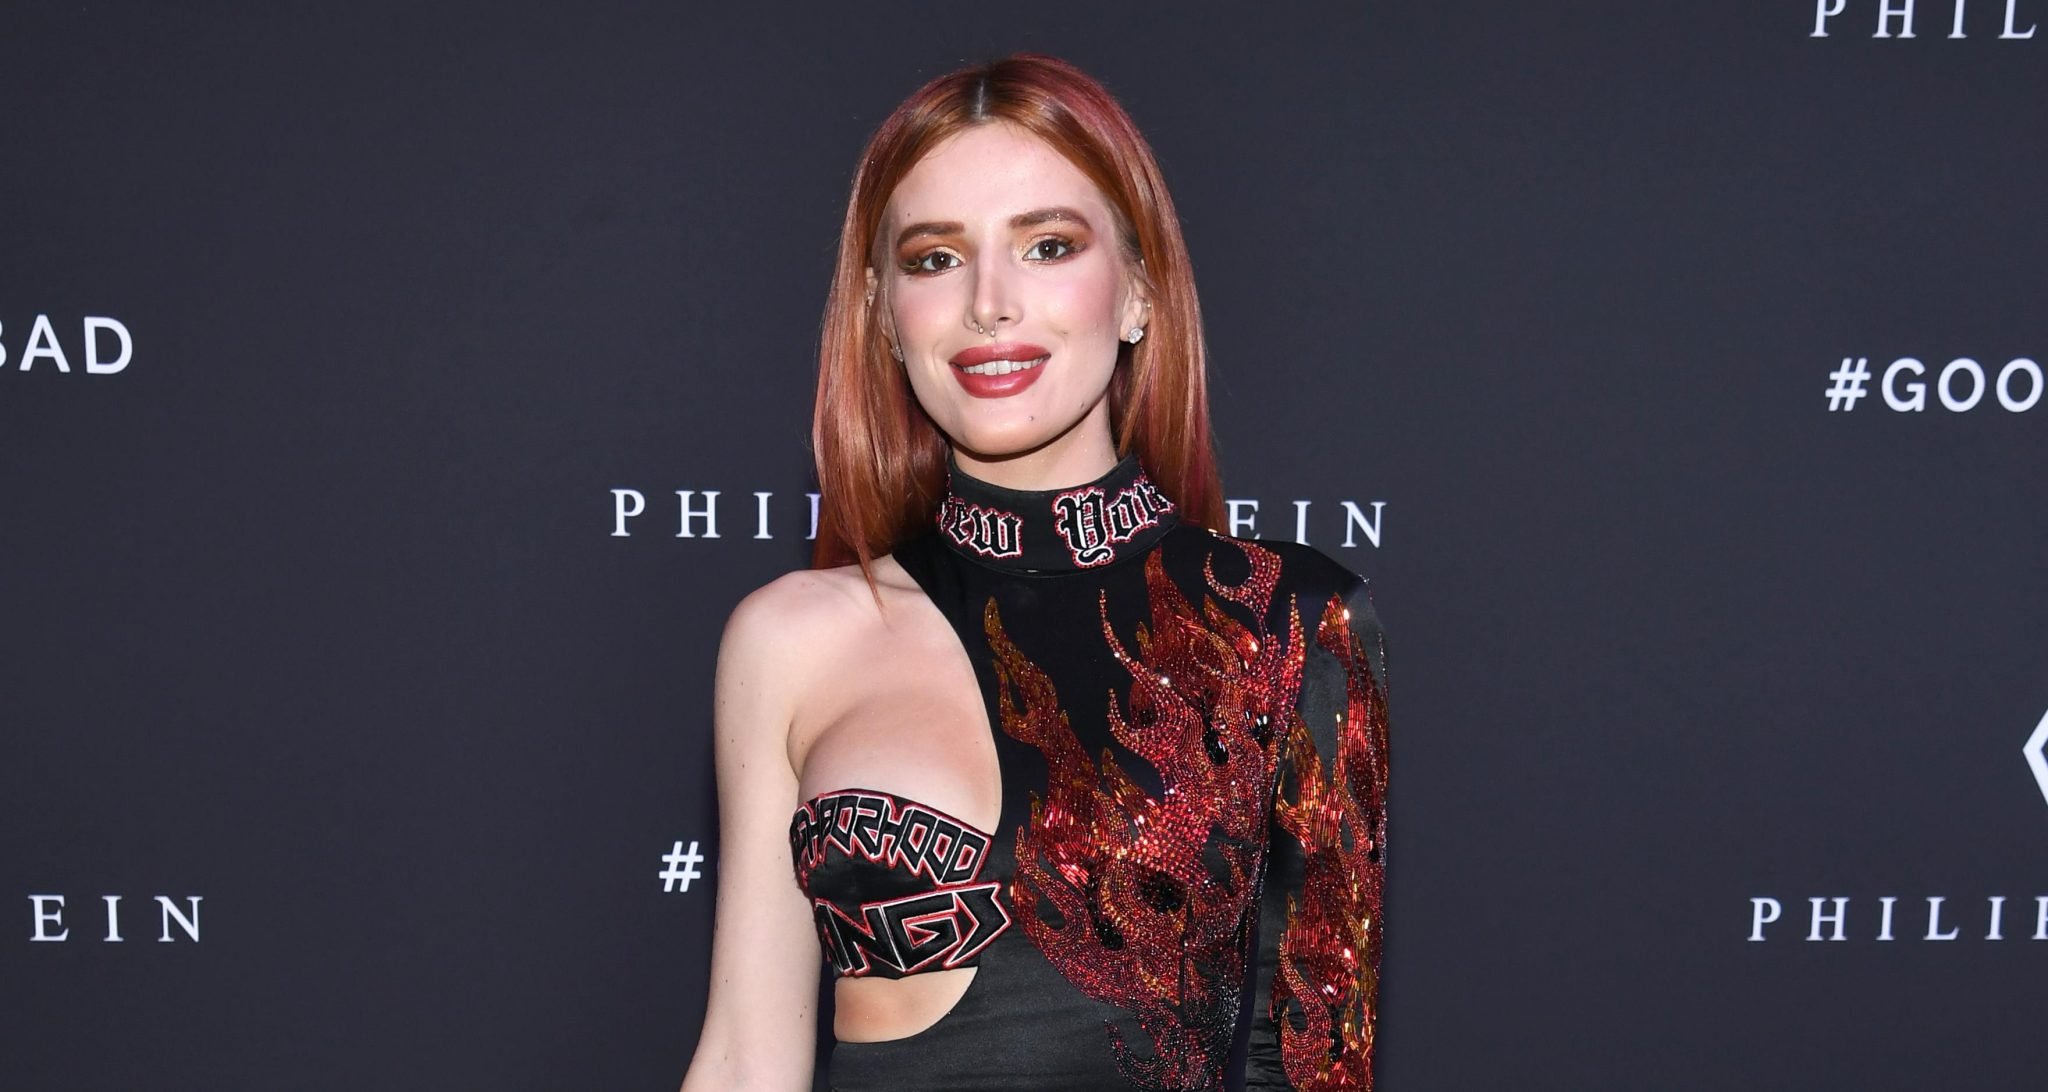 Bella Thorne attends the Philipp Plein fashion show during New York Fashion Week: The Shows at Hammerstein Ballroom